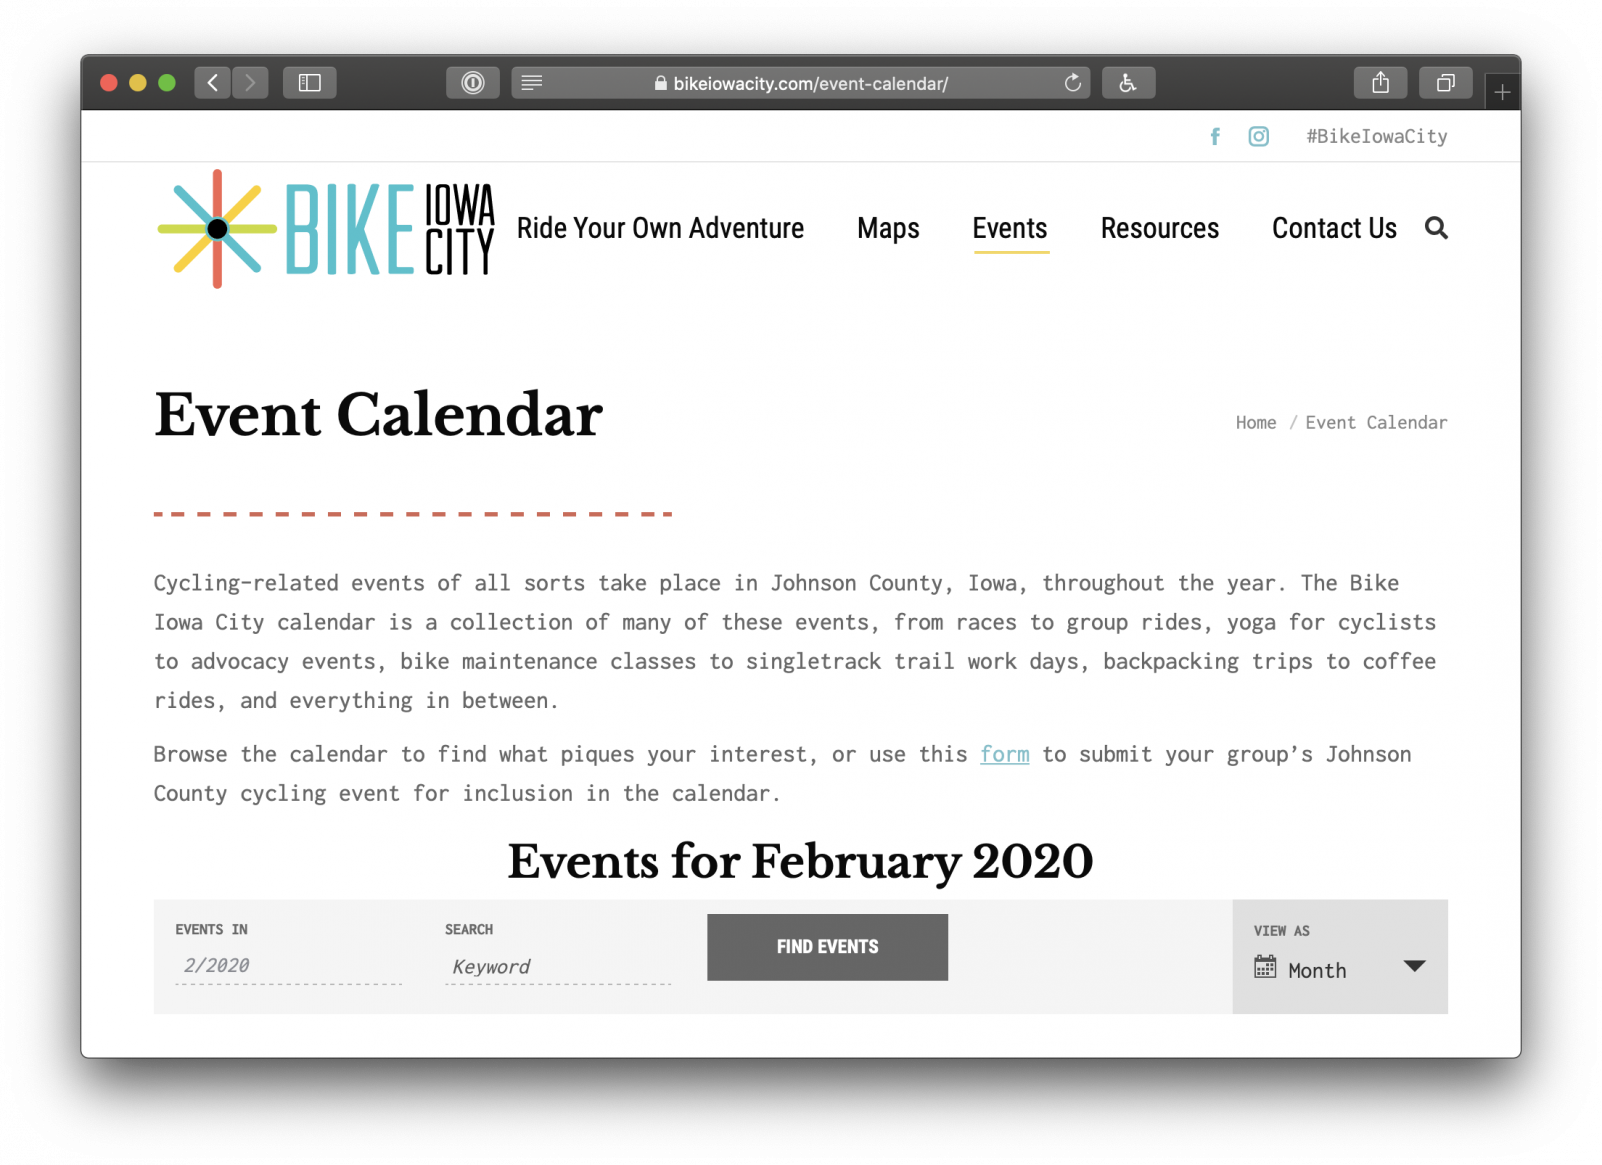 Featured Calendar Bike Iowa City The Events Calendar